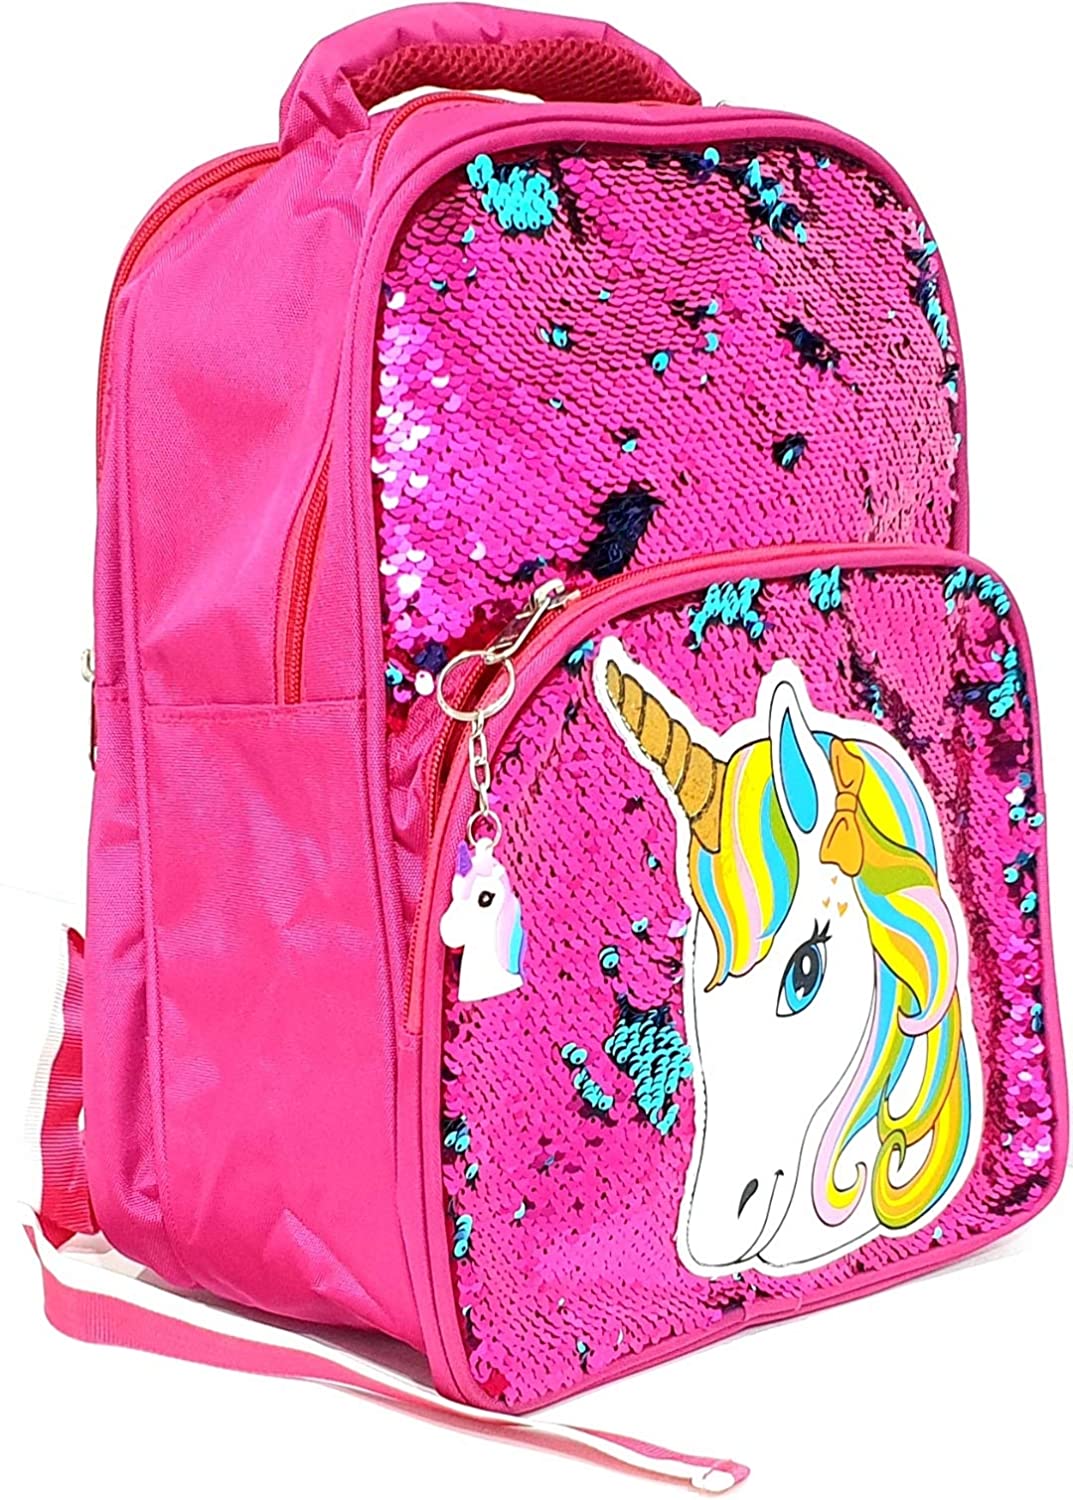 Buy Tote Handbags for Women,Sunny Snowy Work Satchel Purse School Shoulder  Totes(8019,new black) at Amazon.in